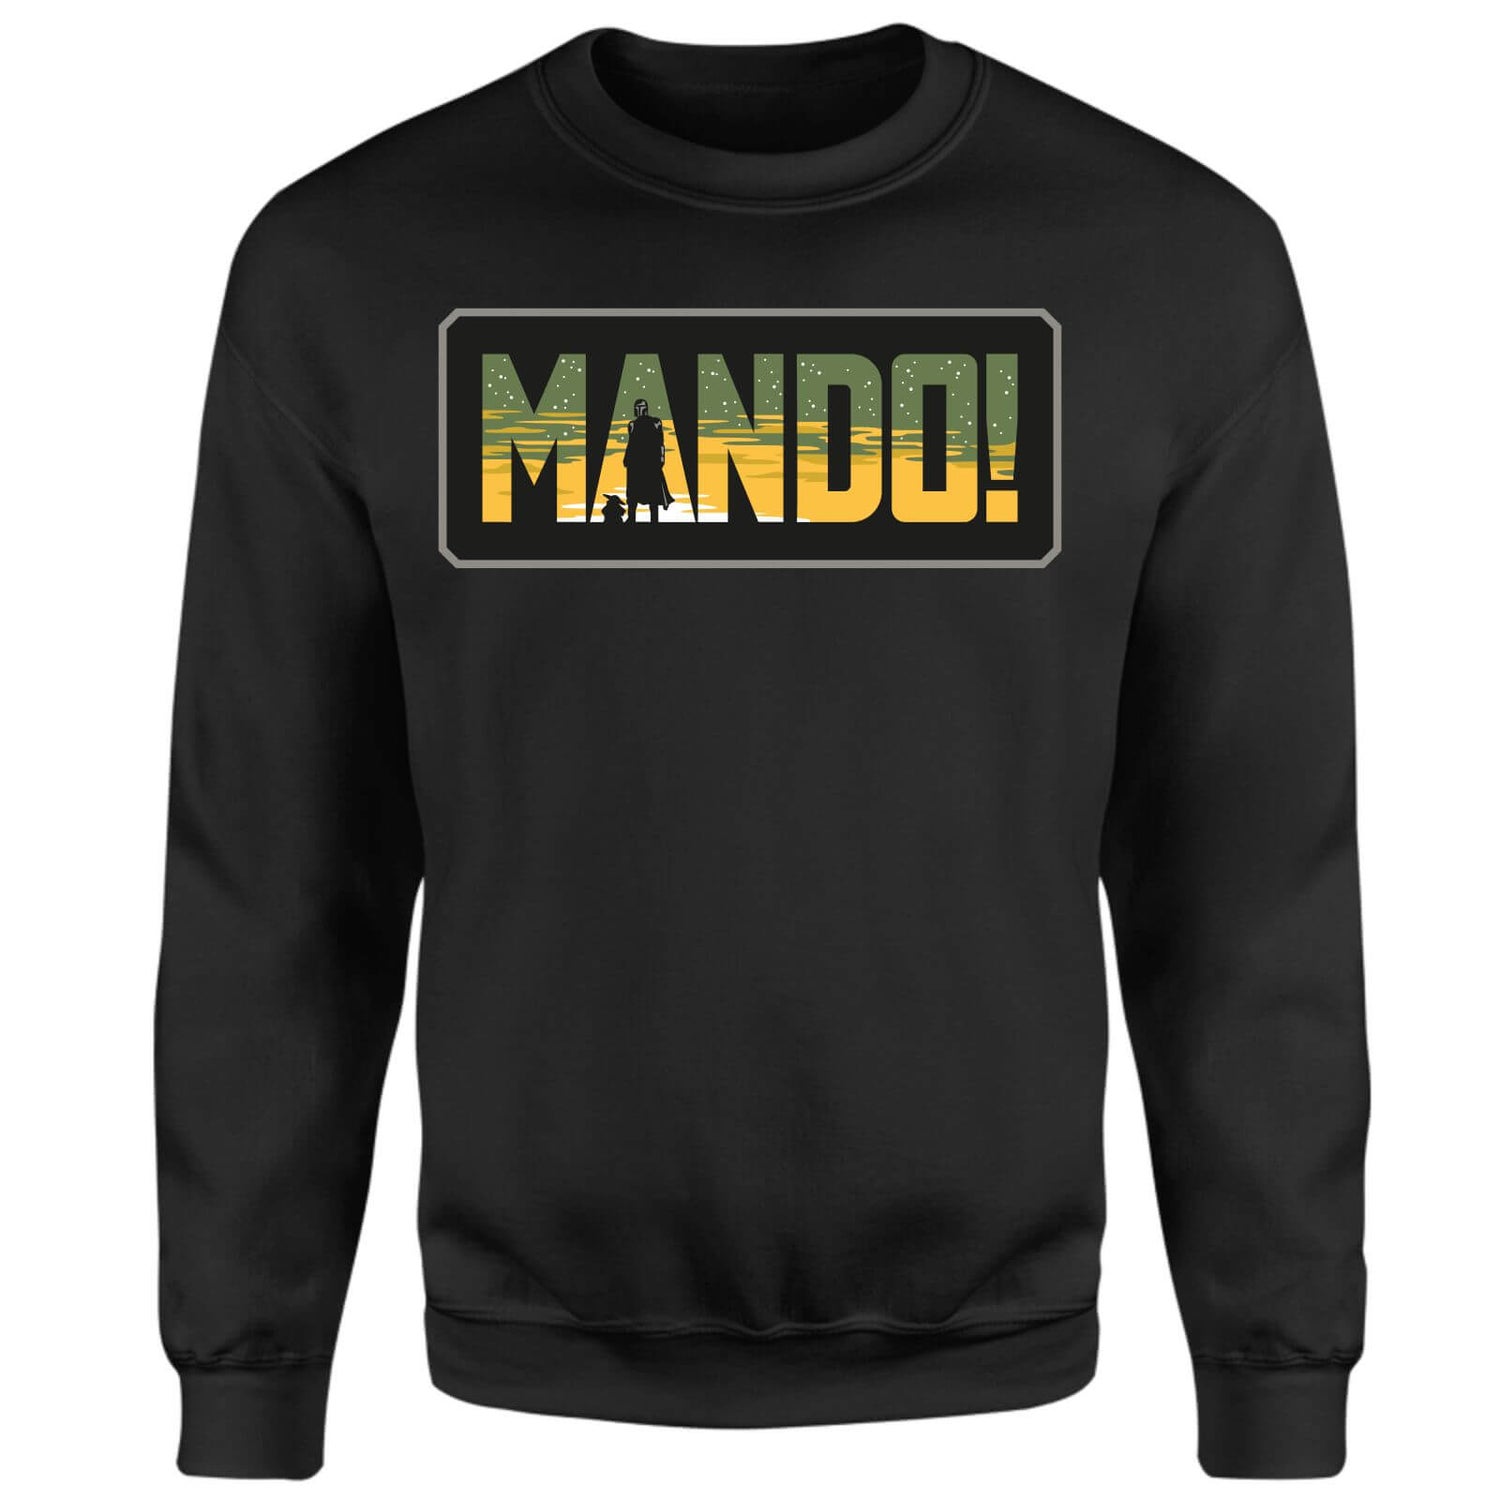 Star Wars The Mandalorian Mando! Sweatshirt - Black